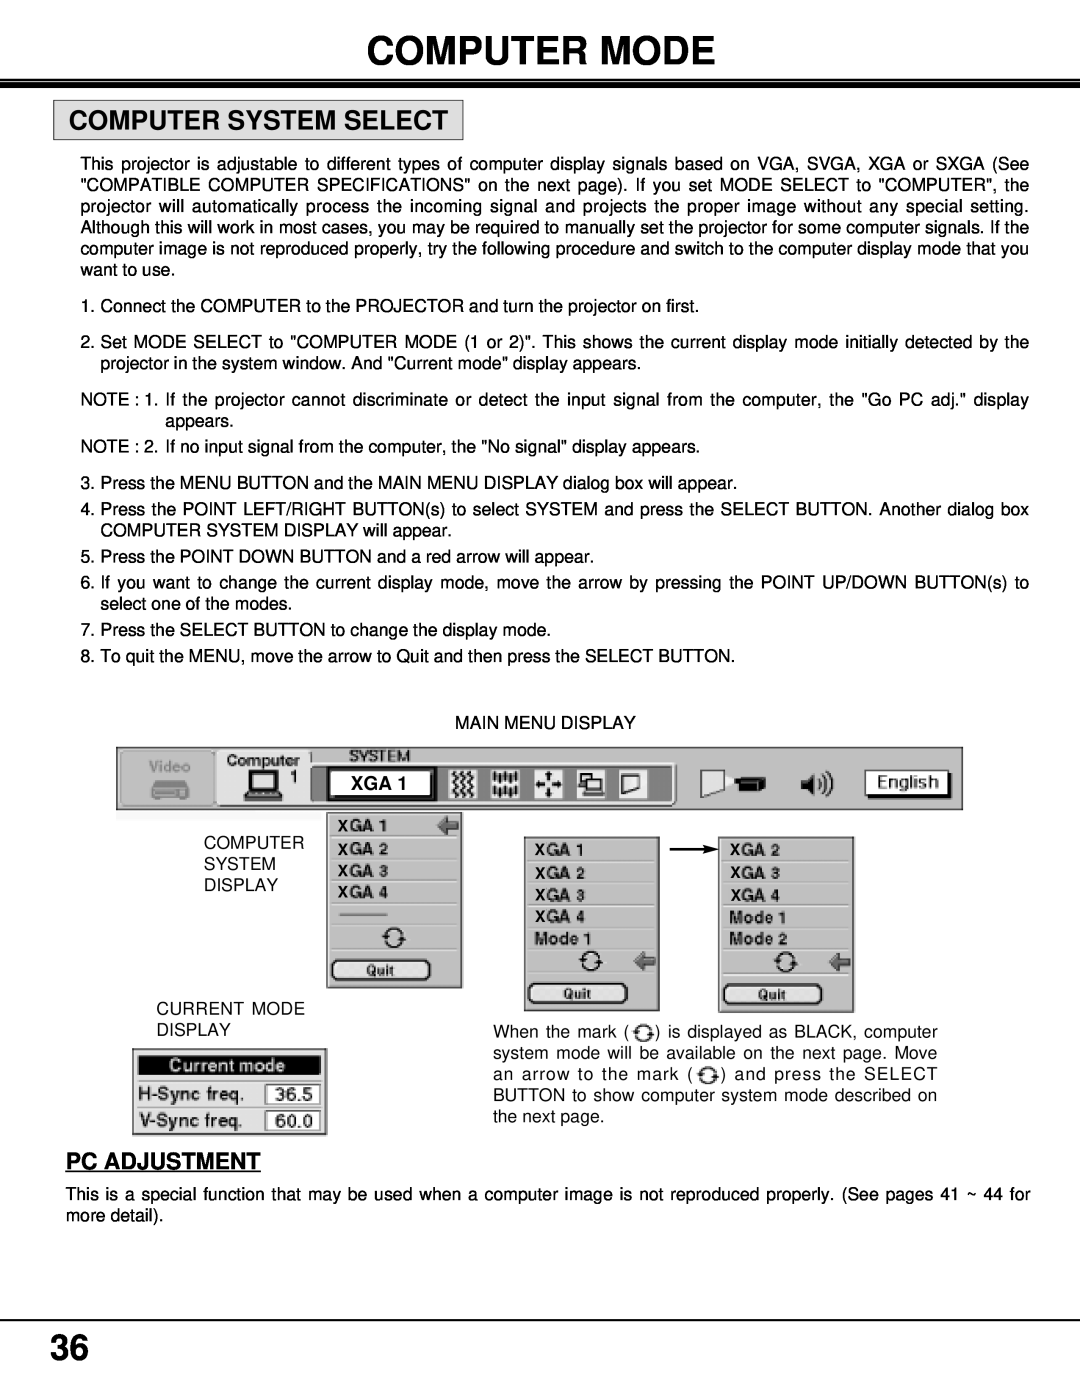 BOXLIGHT MP-37t manual Computer Mode, Computer System Select, Pc Adjustment 